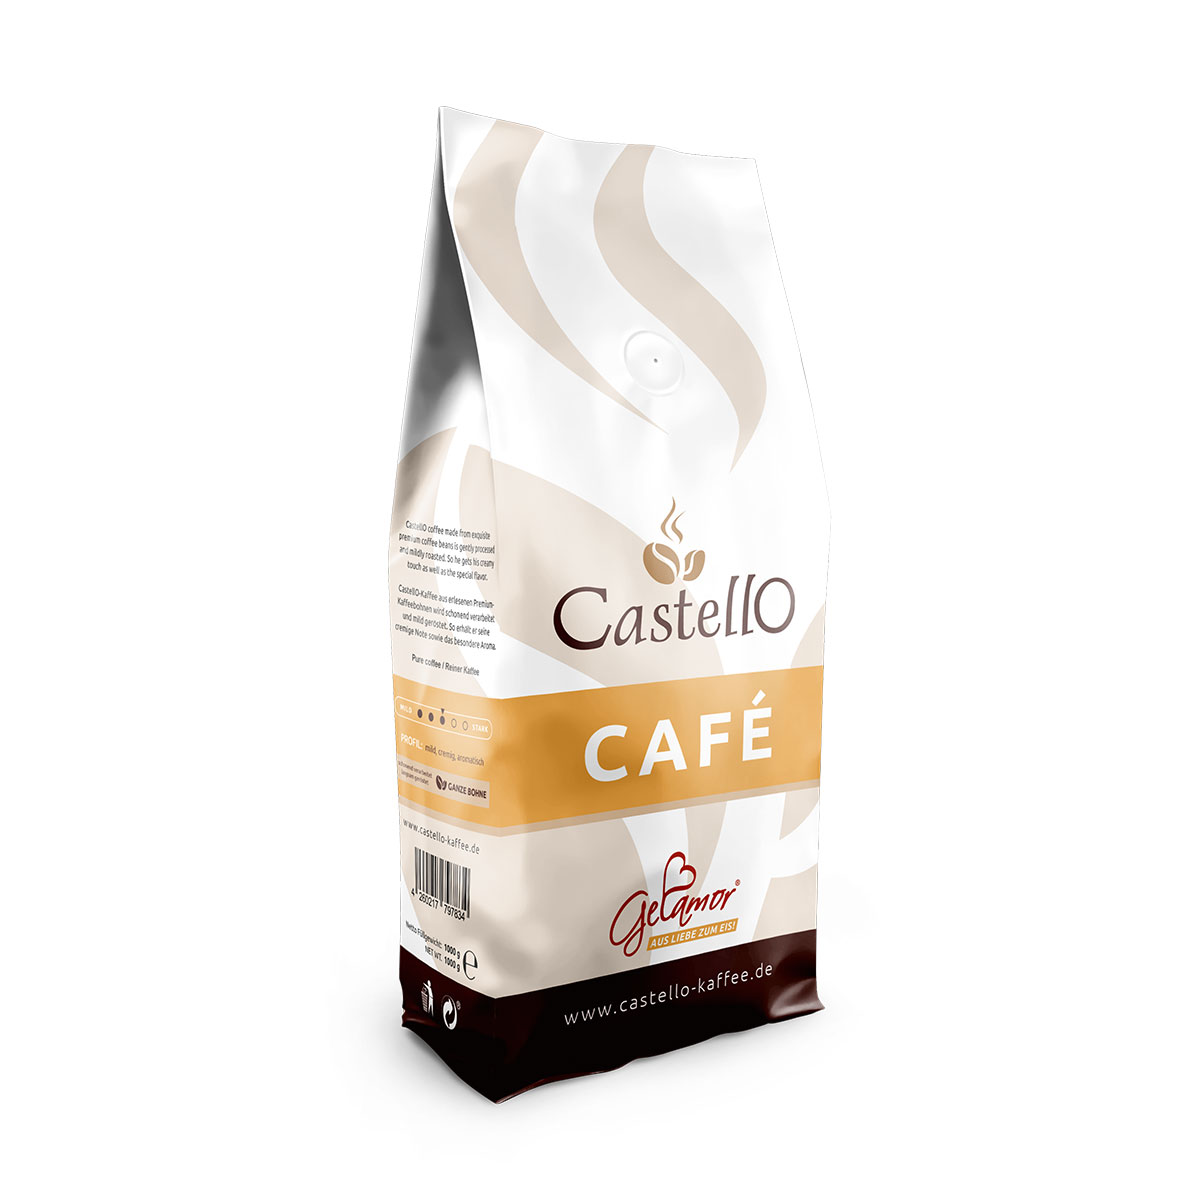 Castello Kaffee Gelamor